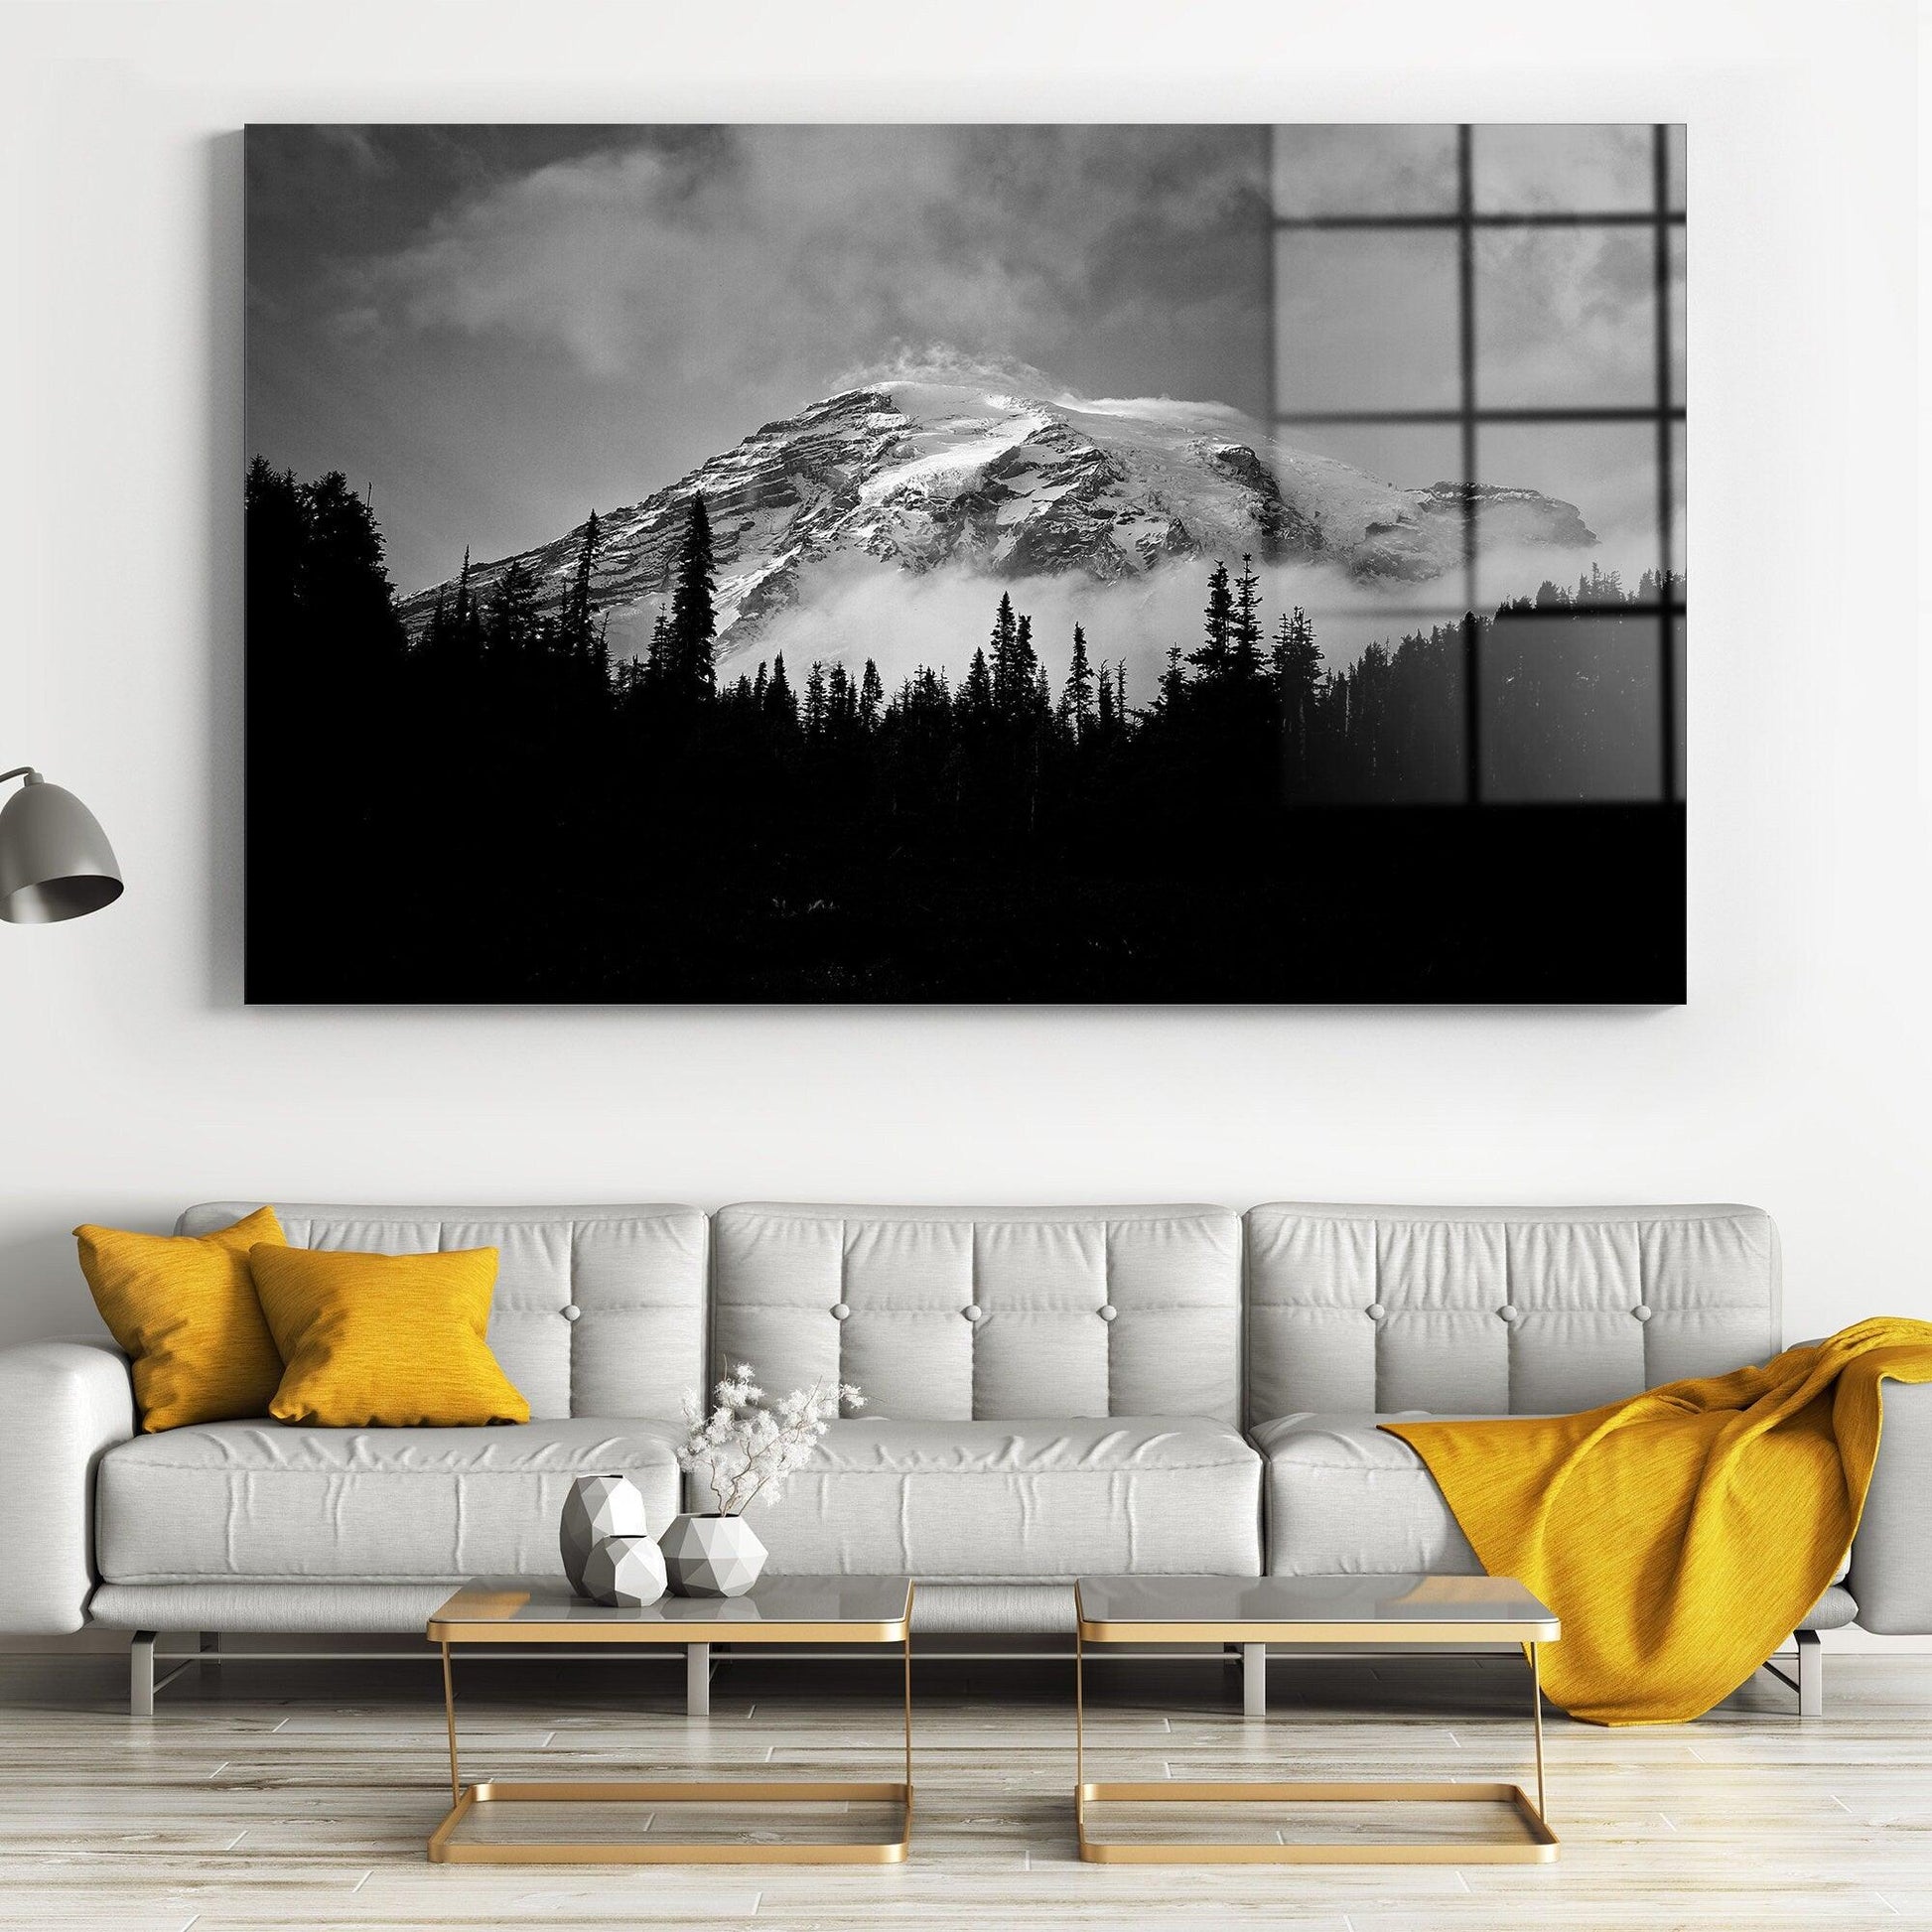 snow mountain wall art| contemporary wall art, mountain room decor, snow home decor, Poster Print Decor for Home & Office Decoration